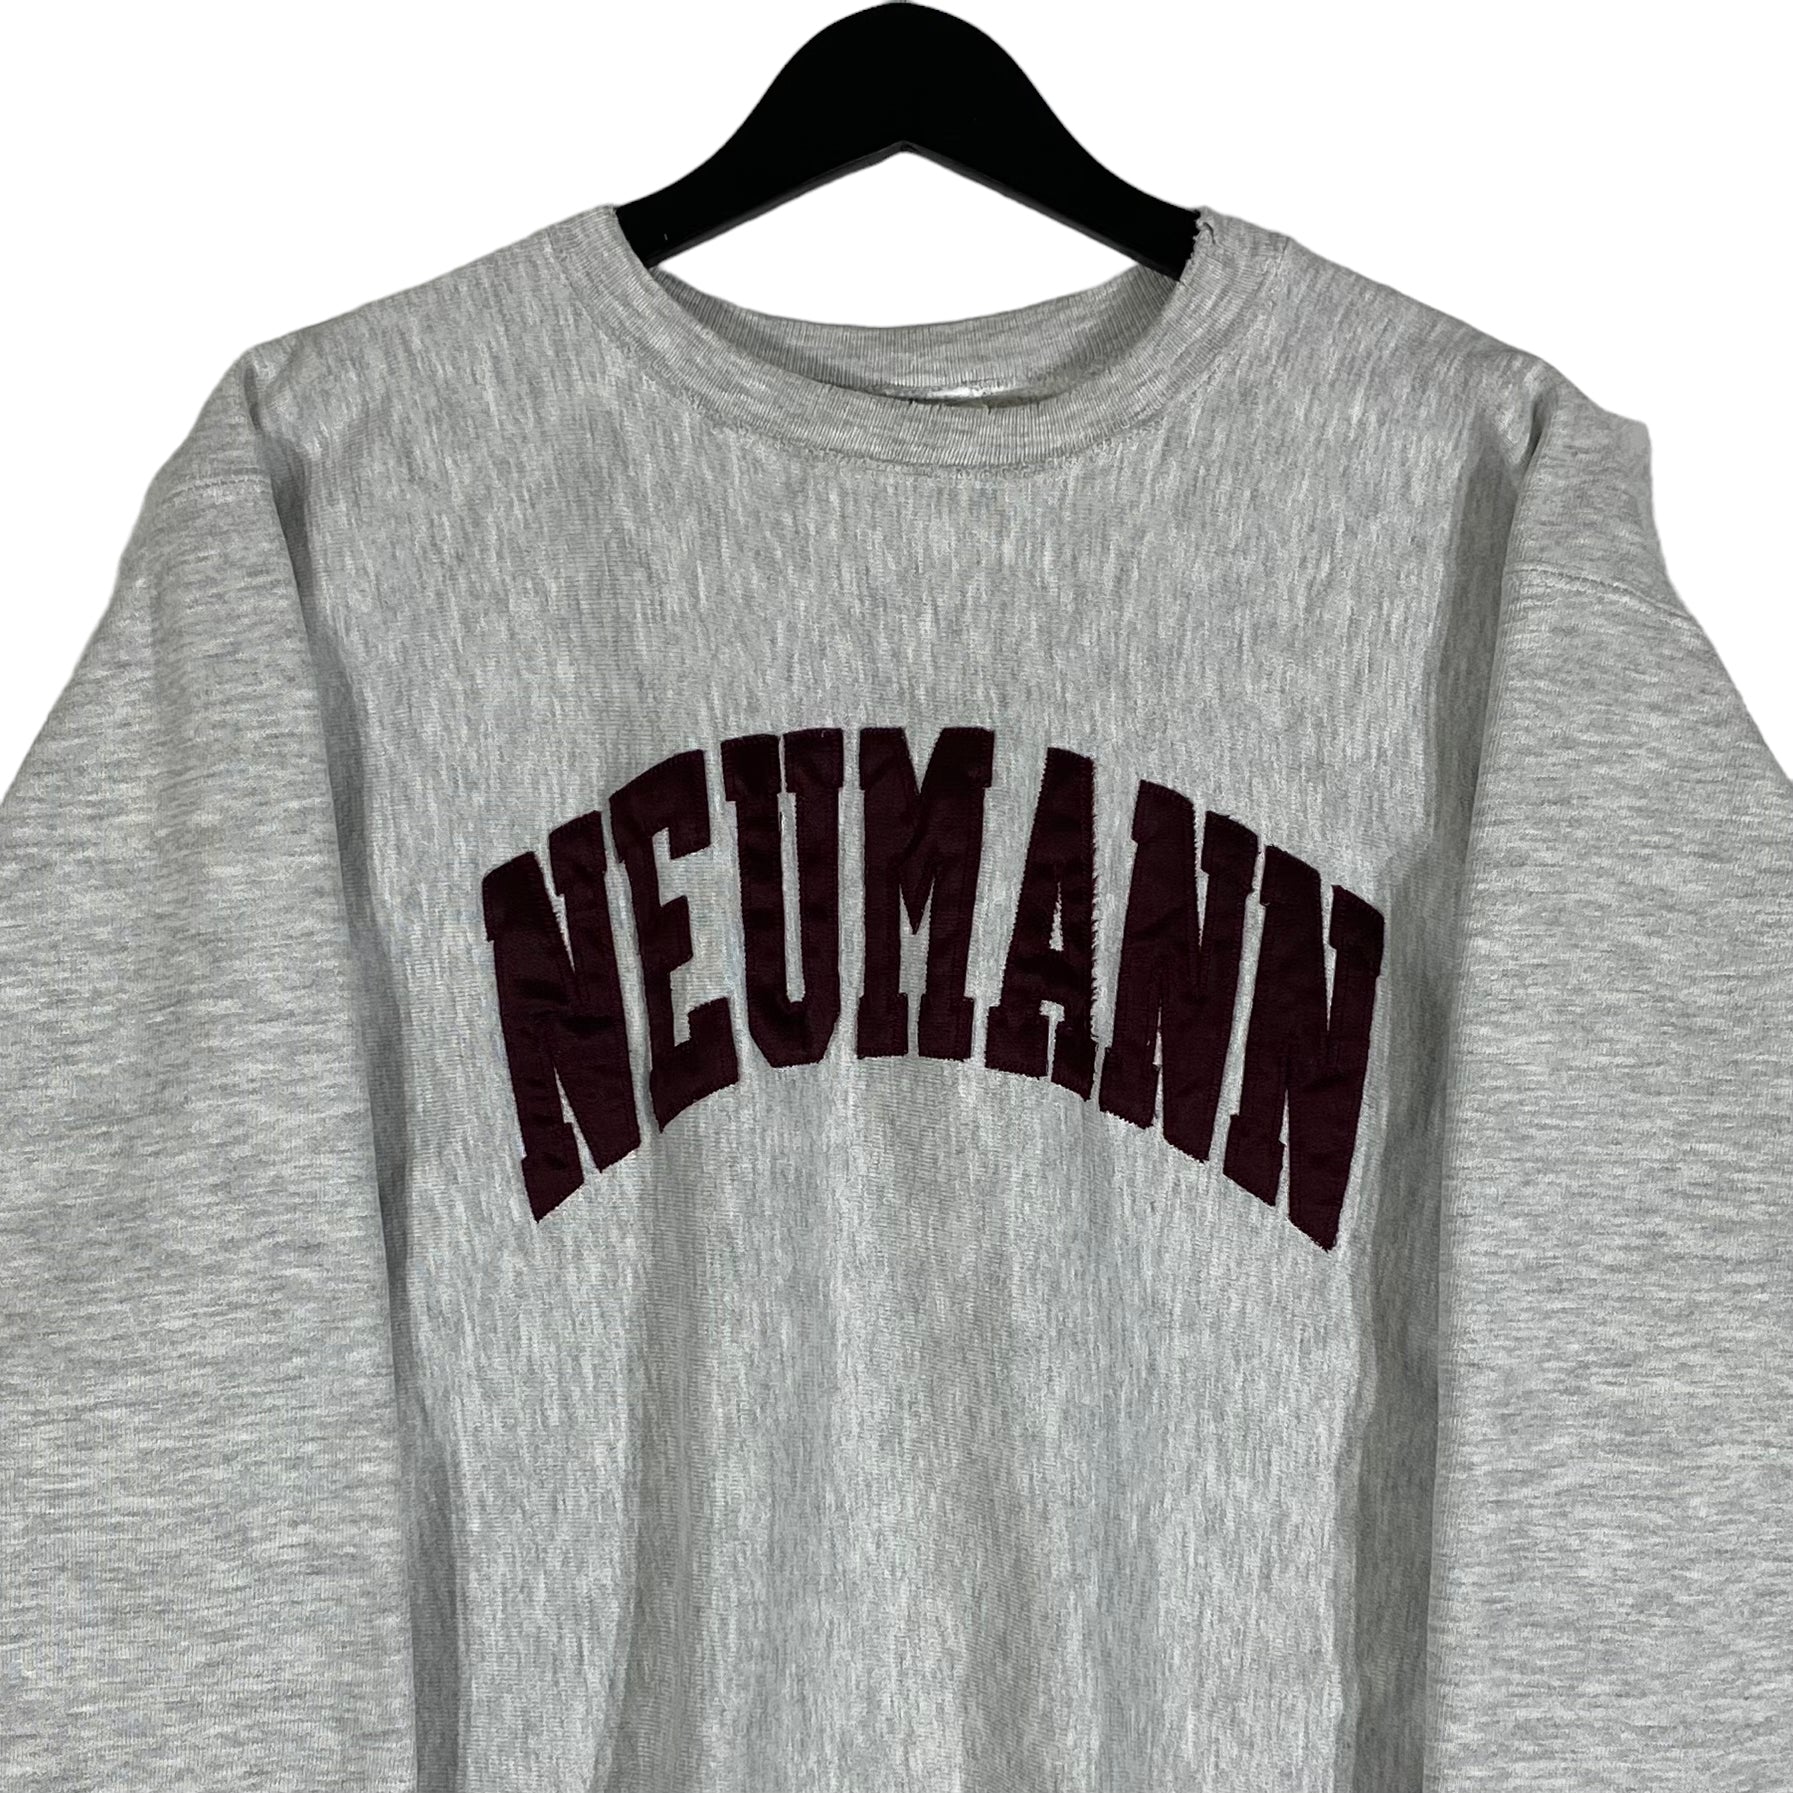 Vintage Champion Neumann Reverse Weave Crewneck